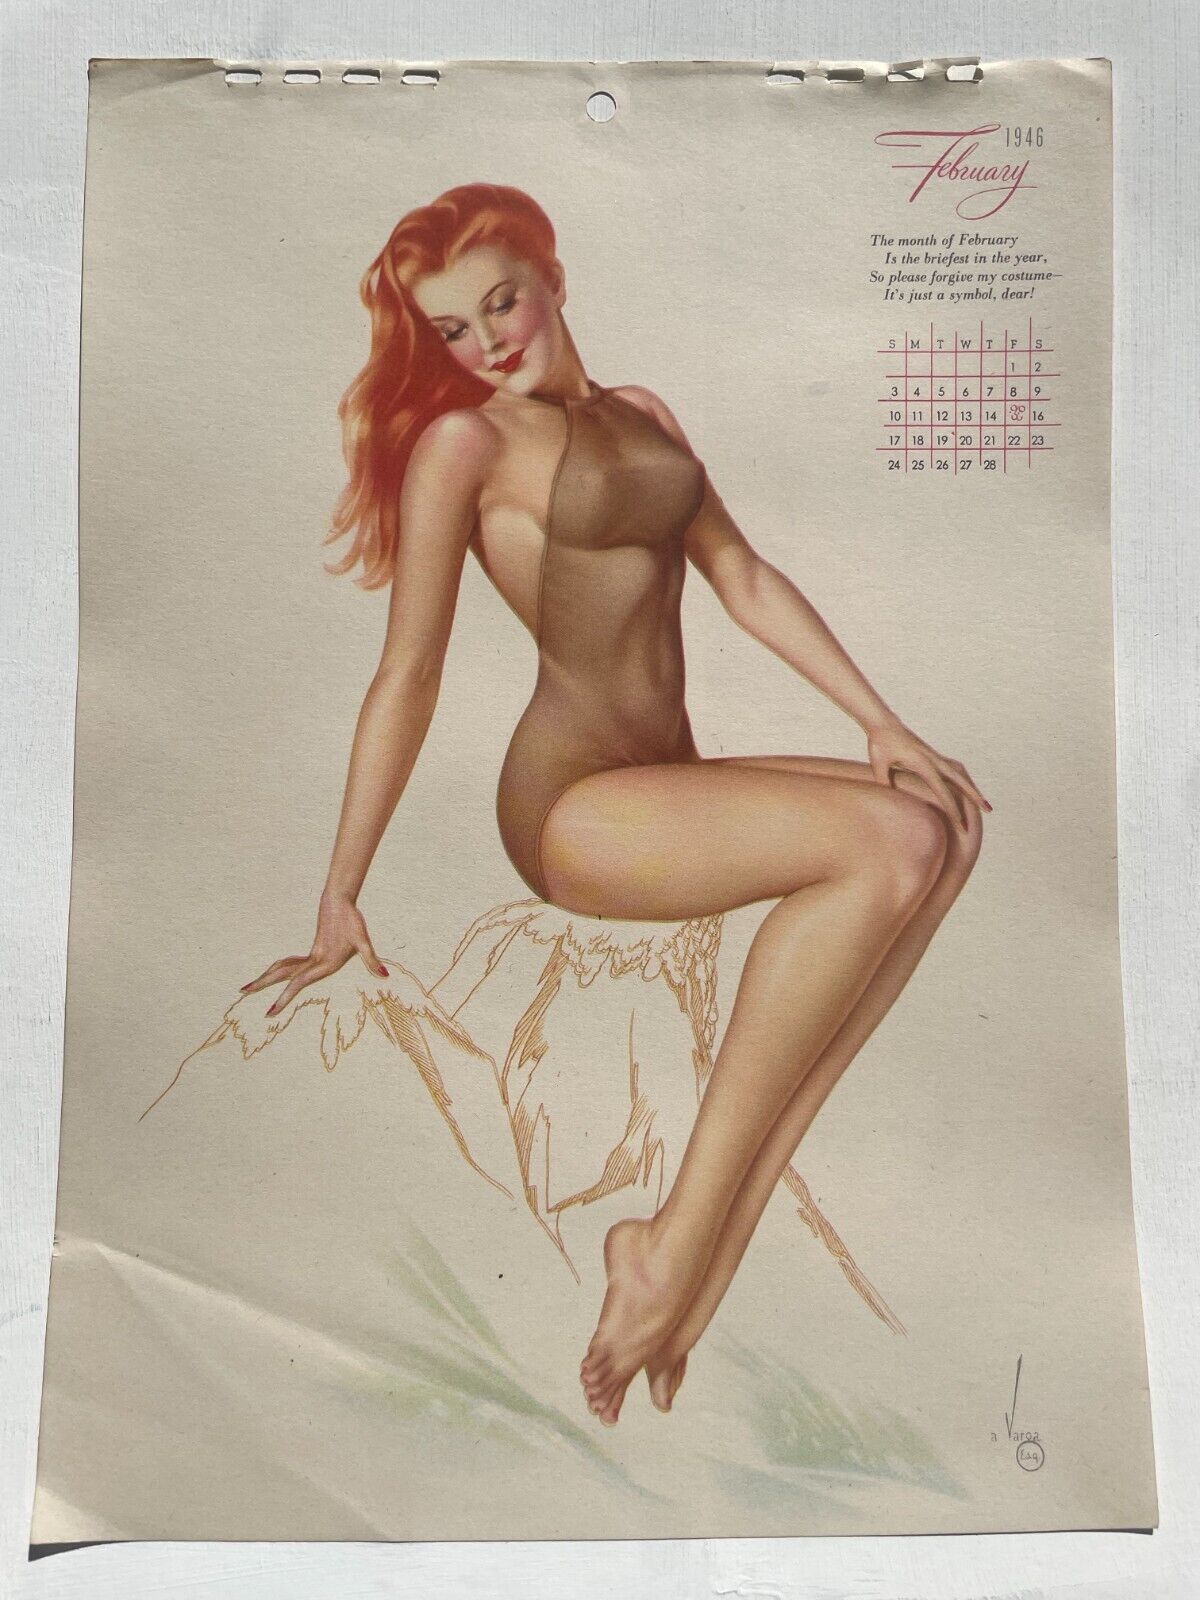 Original February 1946 Esquire Pinup Girl Calendar Page by Varga